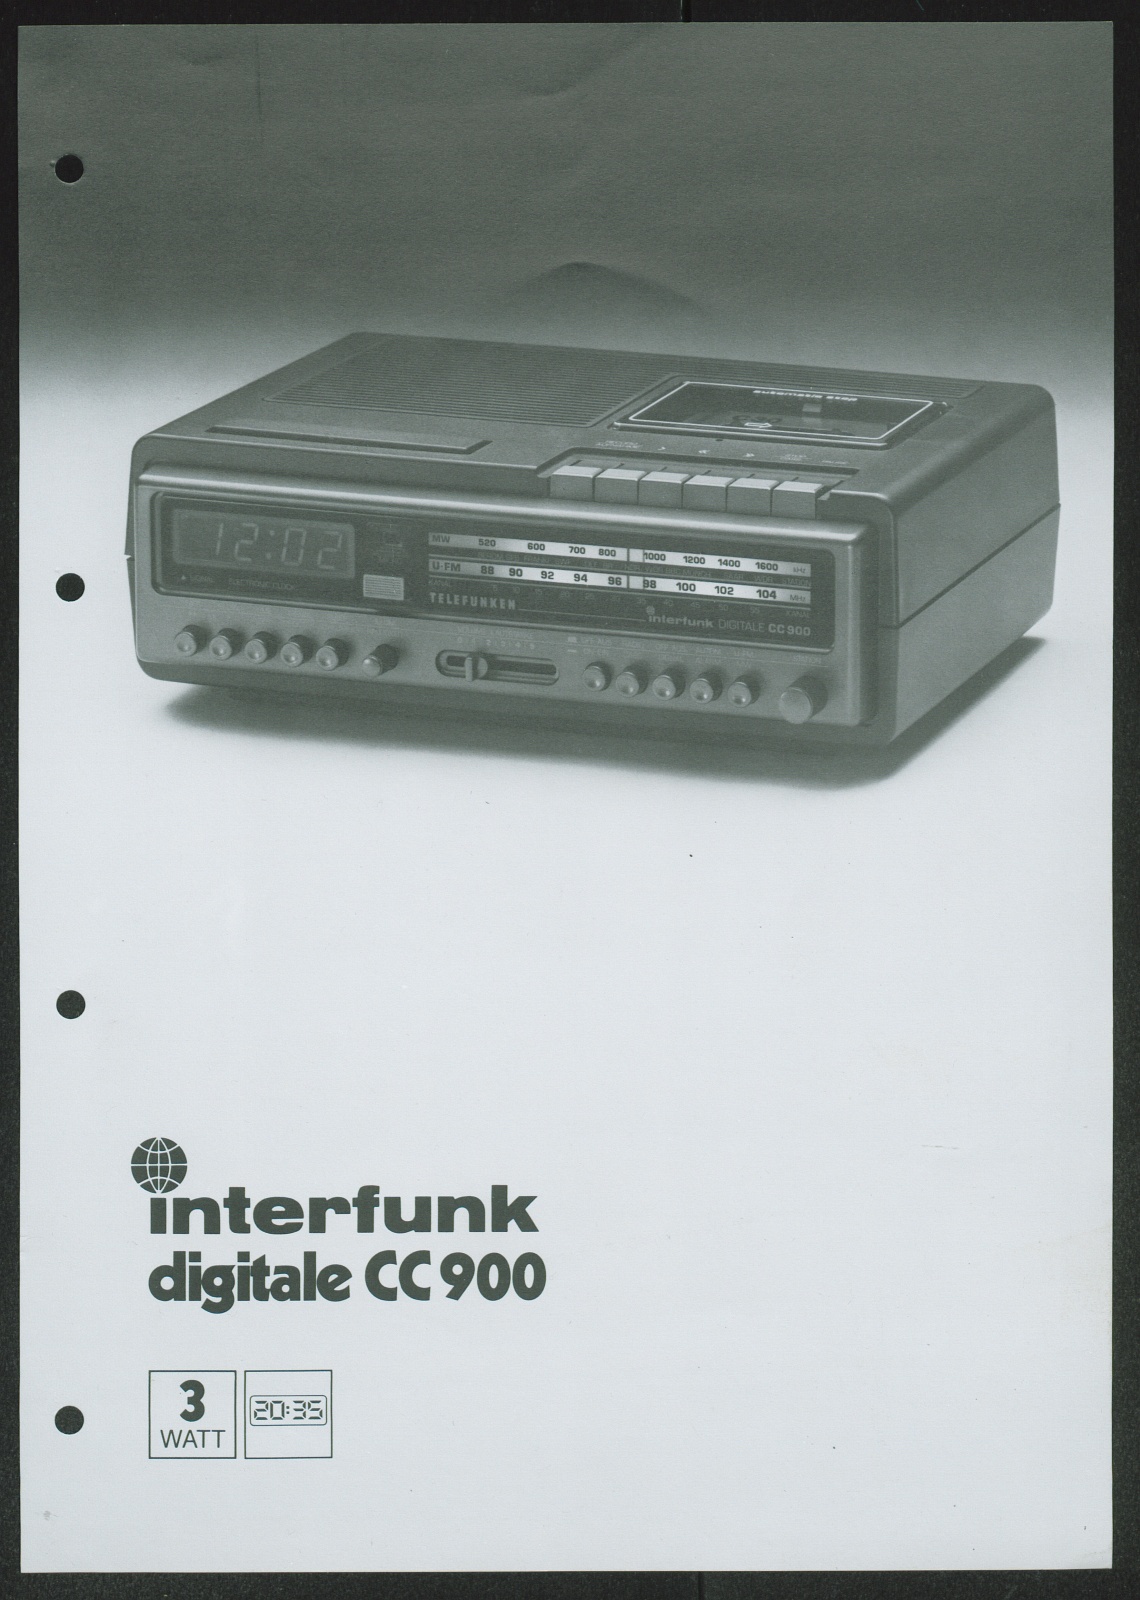 Werbeprospekt: Telefunken interfunk digitale CC900 (Stiftung Deutsches Technikmuseum Berlin CC0)